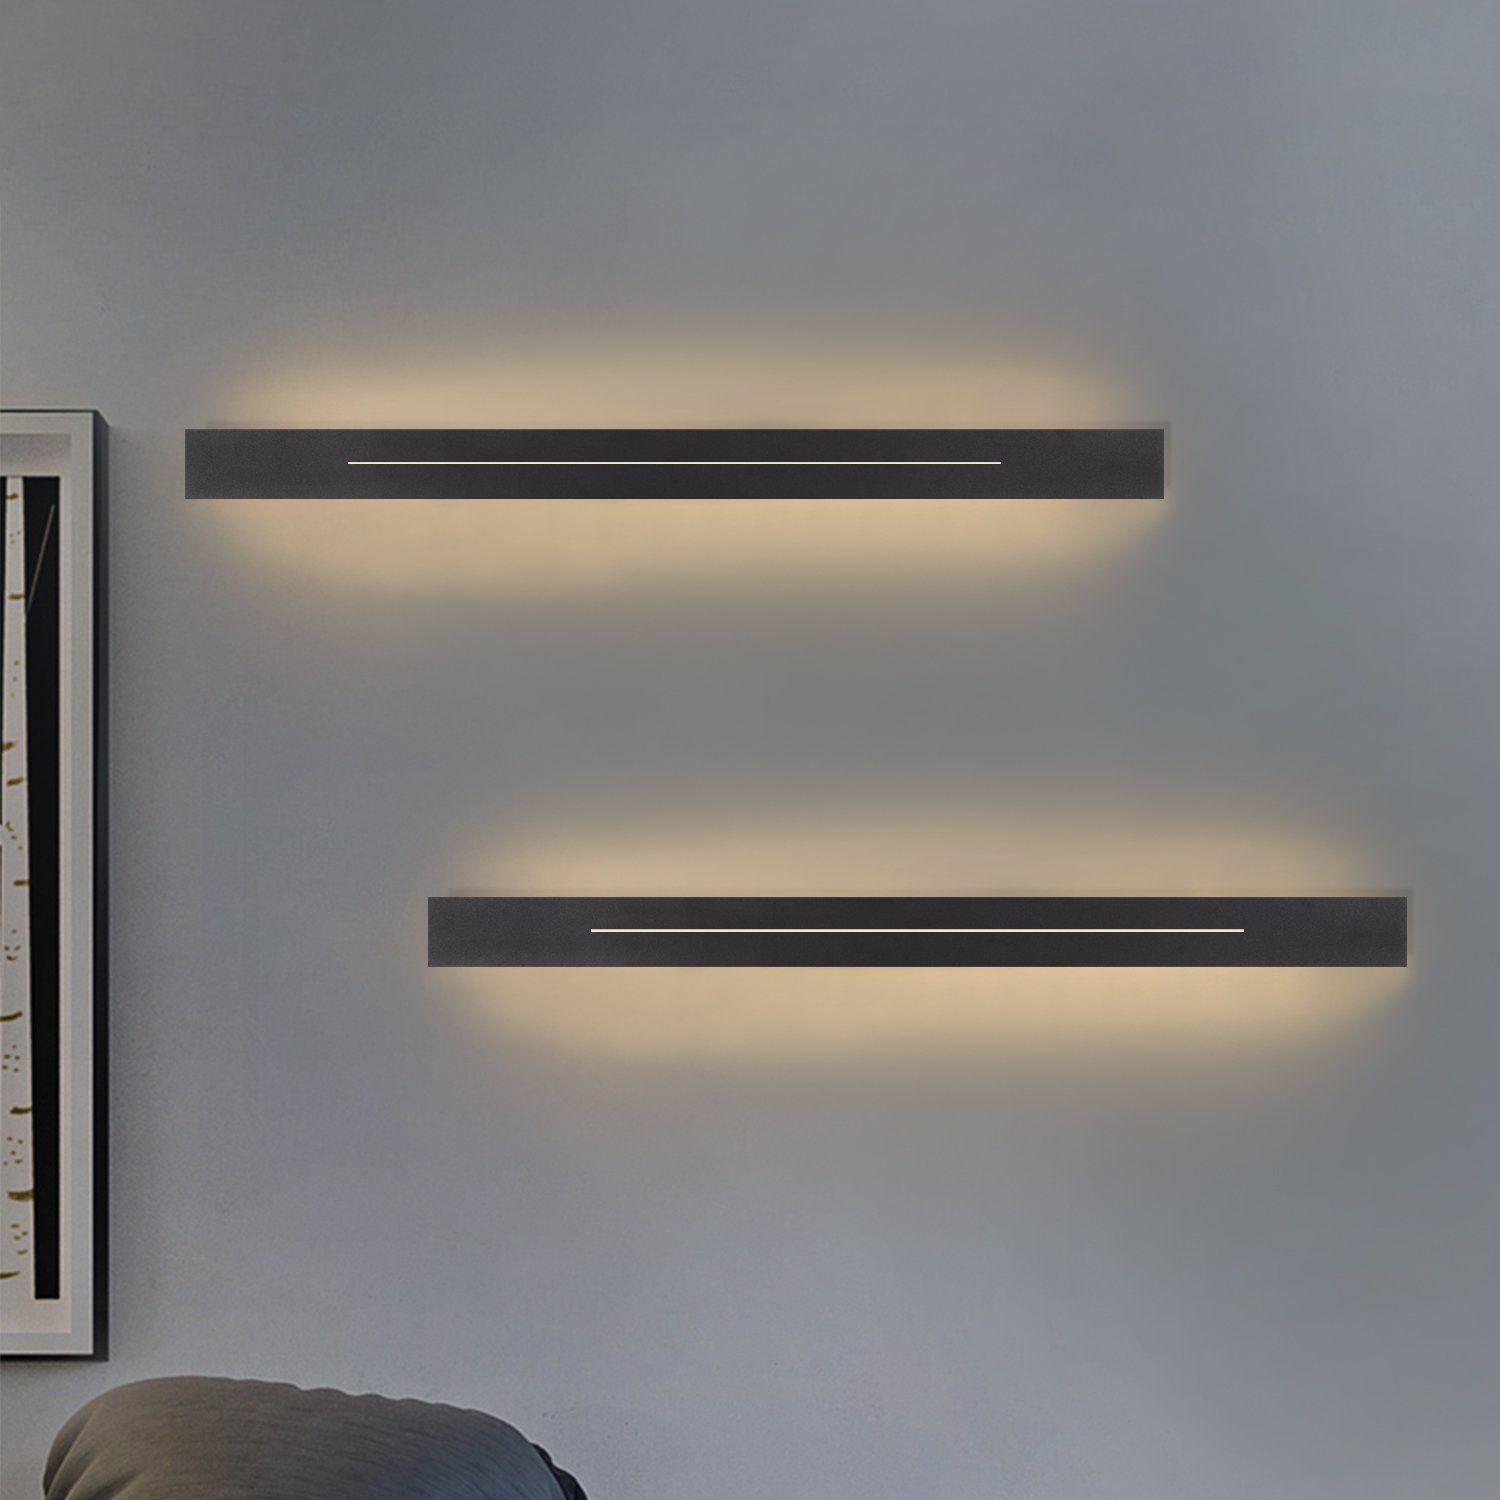 integriert, LED 60cm innen 100cm, Wandlampe warmweiß, Wandleuchte fest 60cm ZMH weiß/schwarz LED 30cm Schwarz